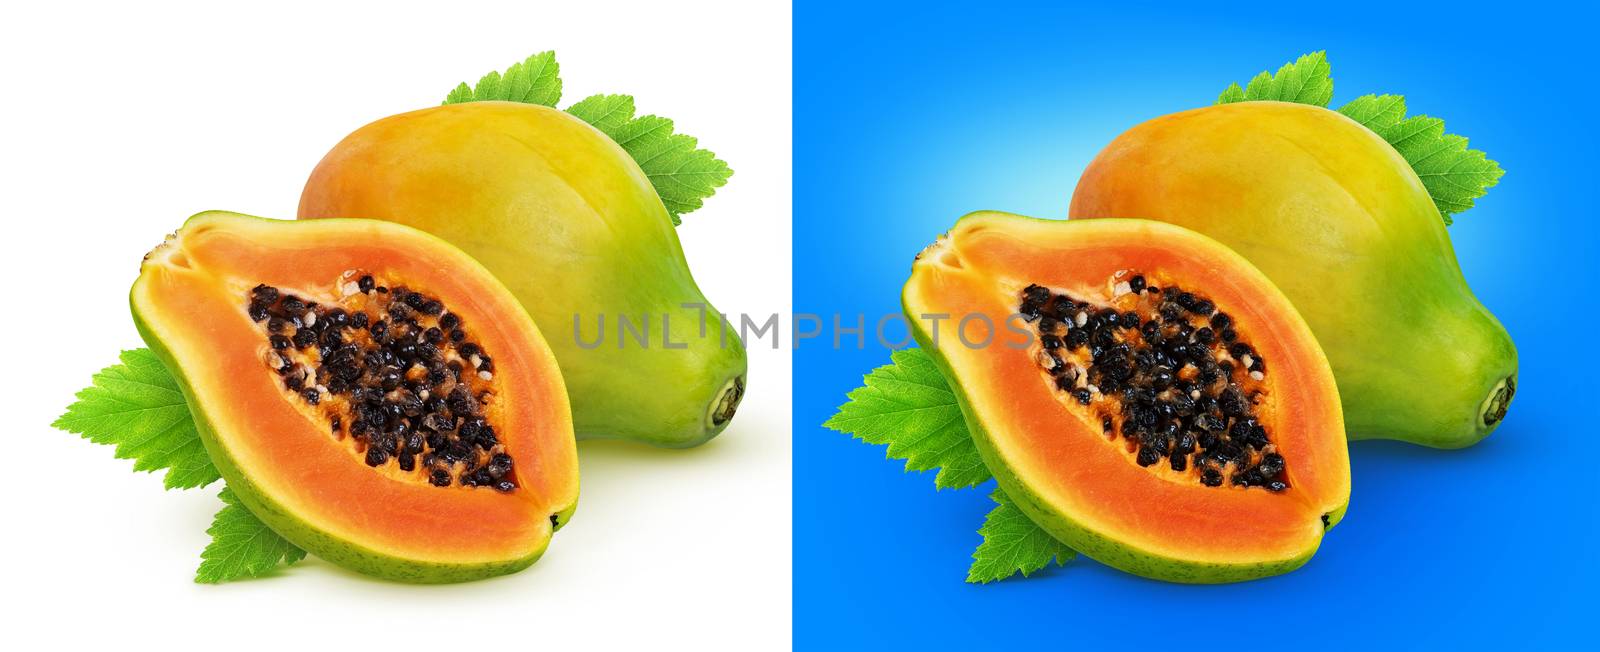 Papaya fruit isolated on white background with clipping path by xamtiw